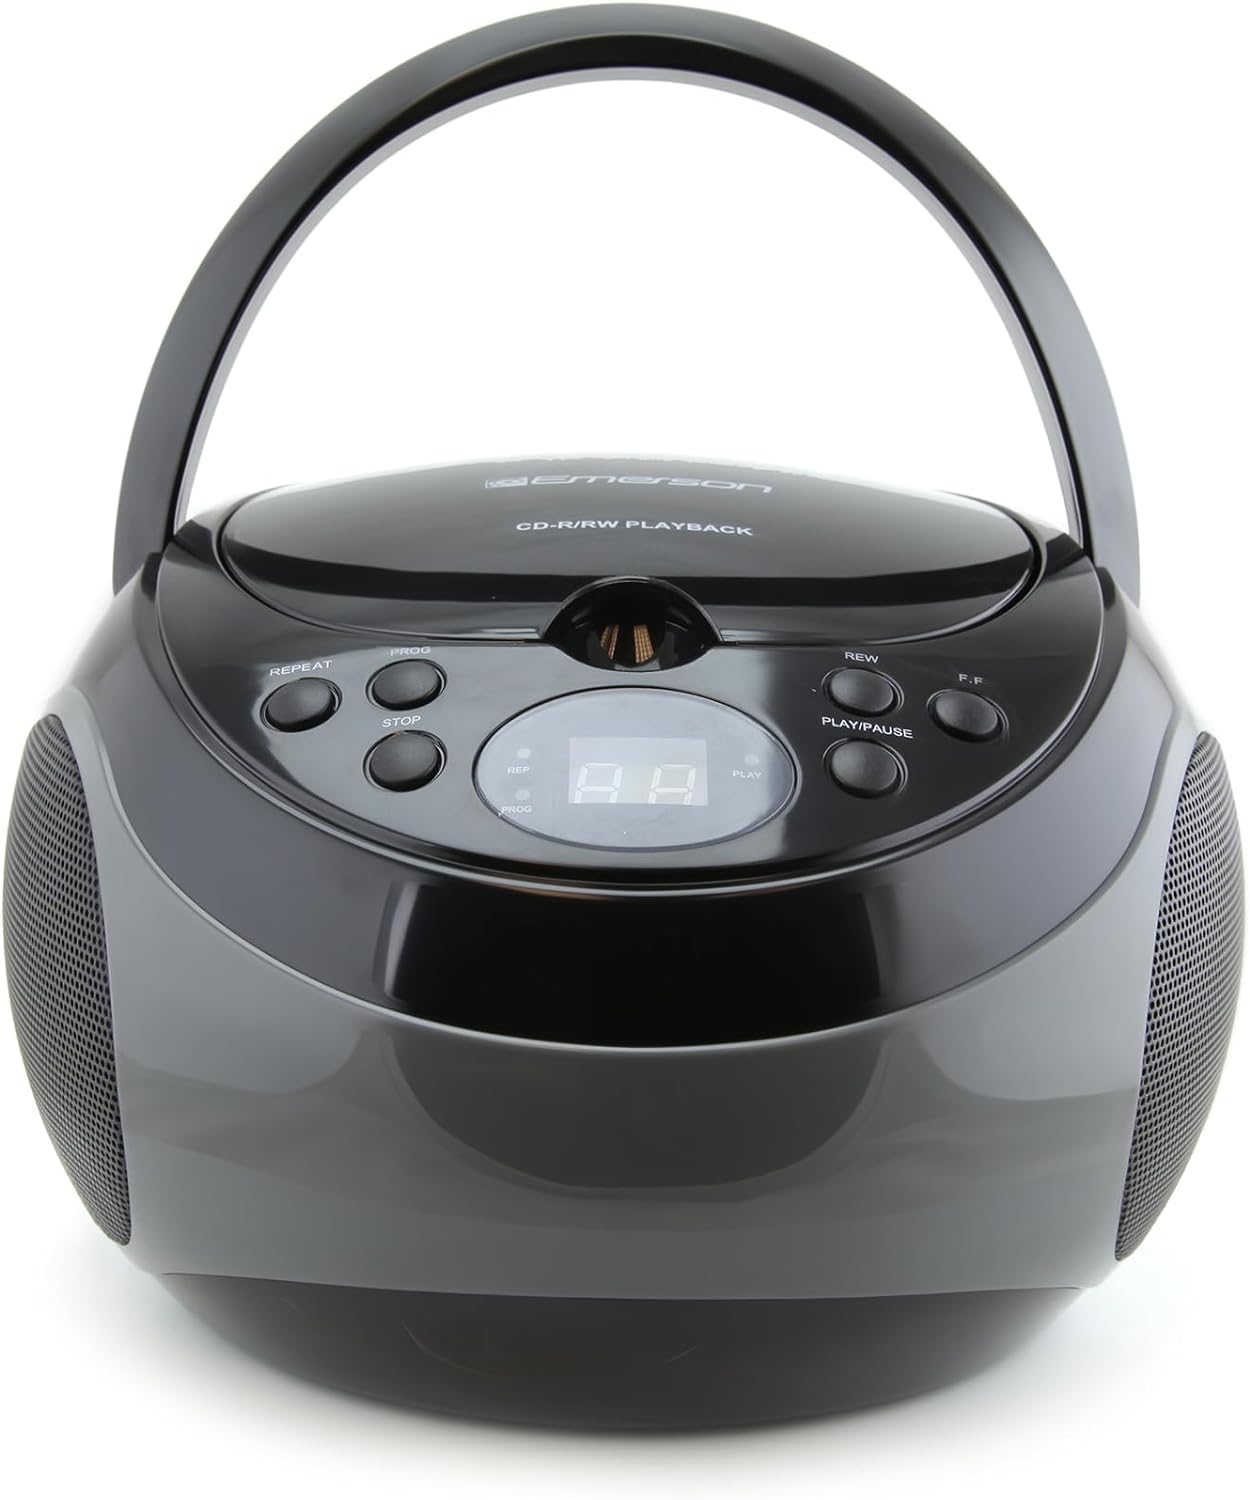 Emerson EPB-3000 Black Portable Cd Player AM FM Stereo Radio - image 4 of 4